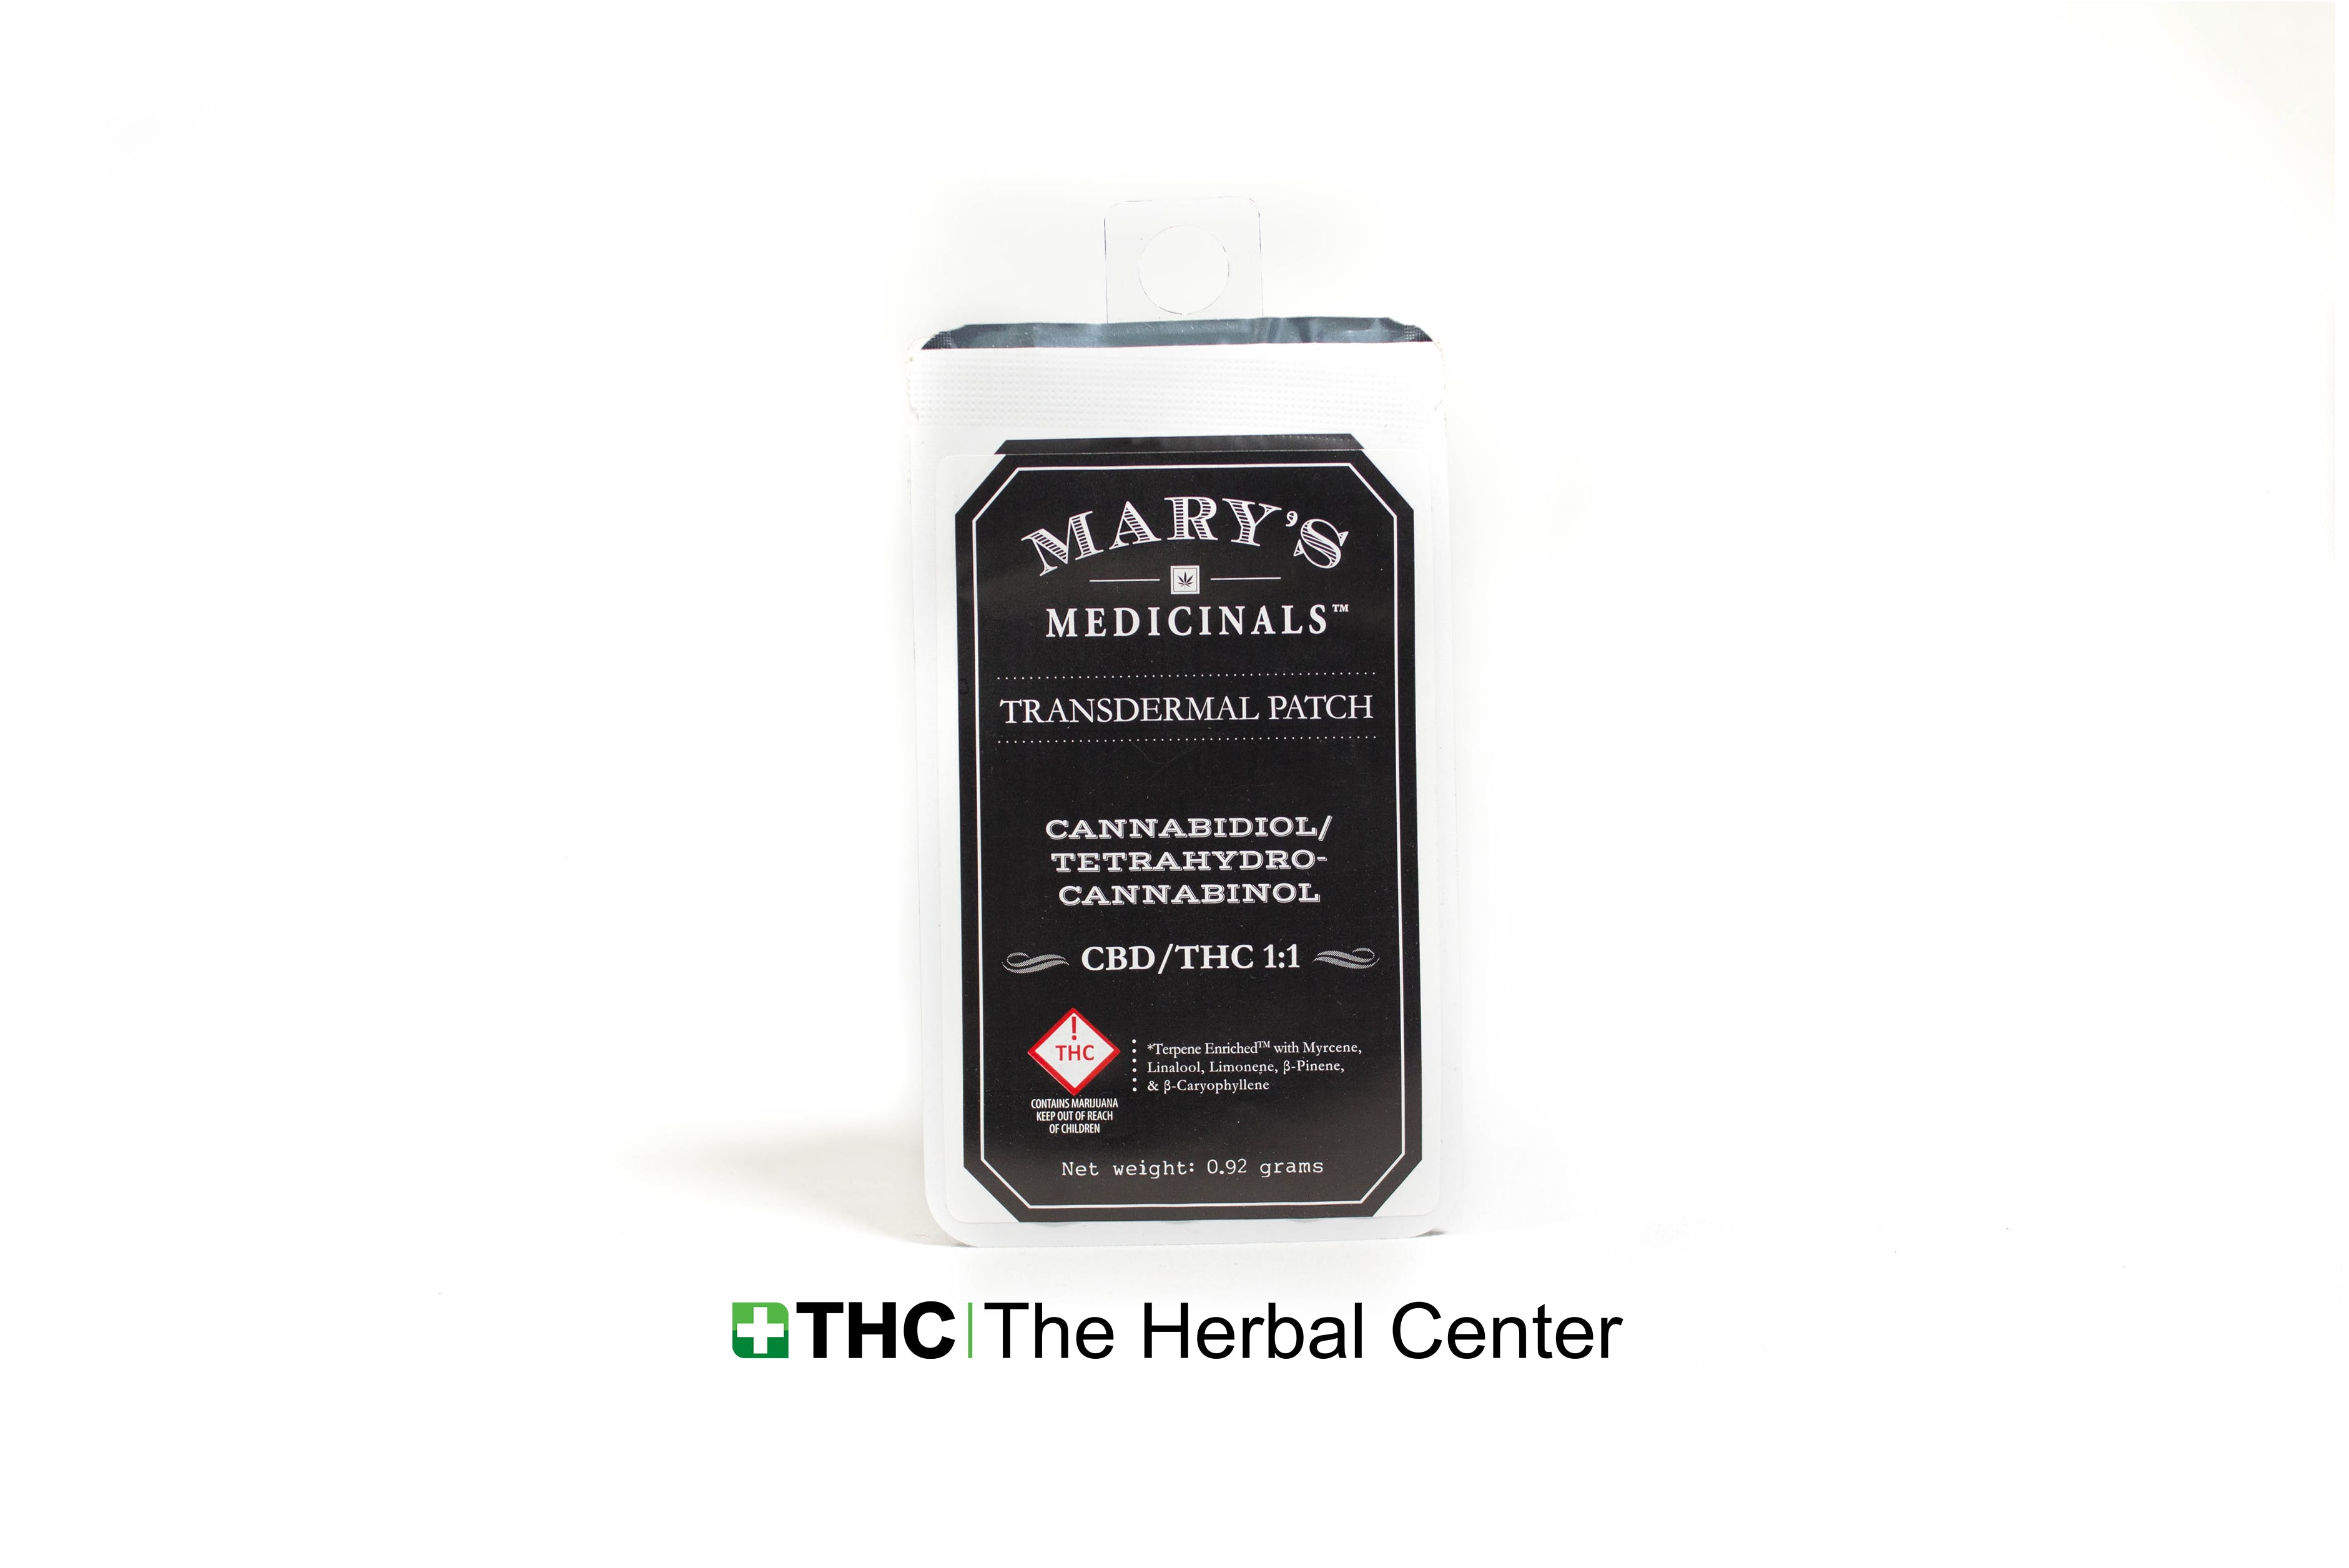 marijuana-dispensaries-the-herbal-center-broadway-rec-in-denver-marys-medicinals-transdermal-patch-a-c2-80-c2-93-11-cbdthc